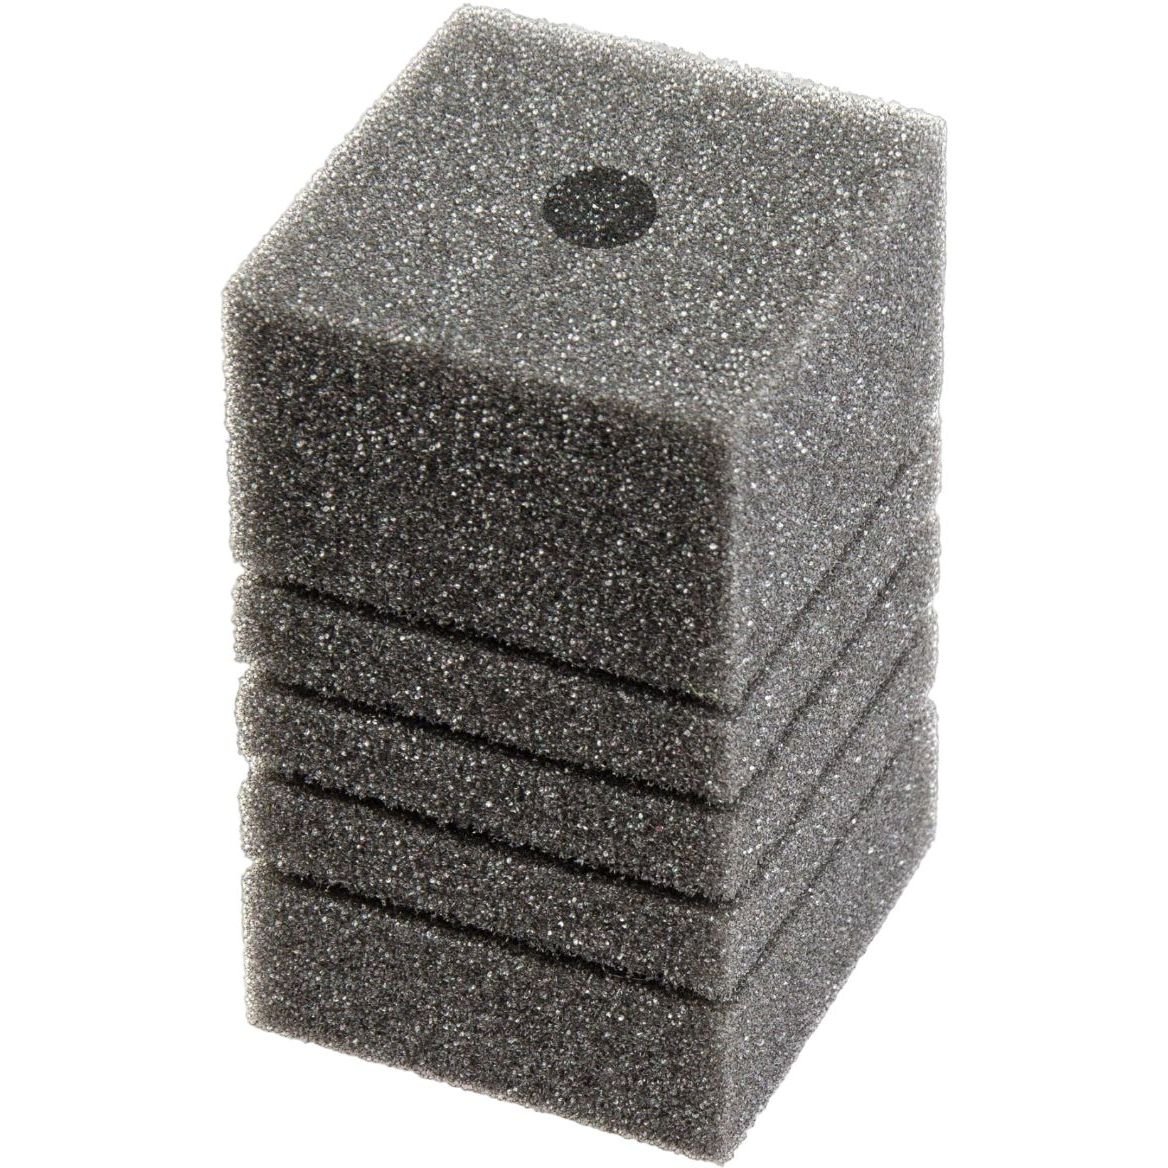 Мочалка Filter sponge Ukr, пряма крупнопориста рифлена, 9х15 см - фото 1